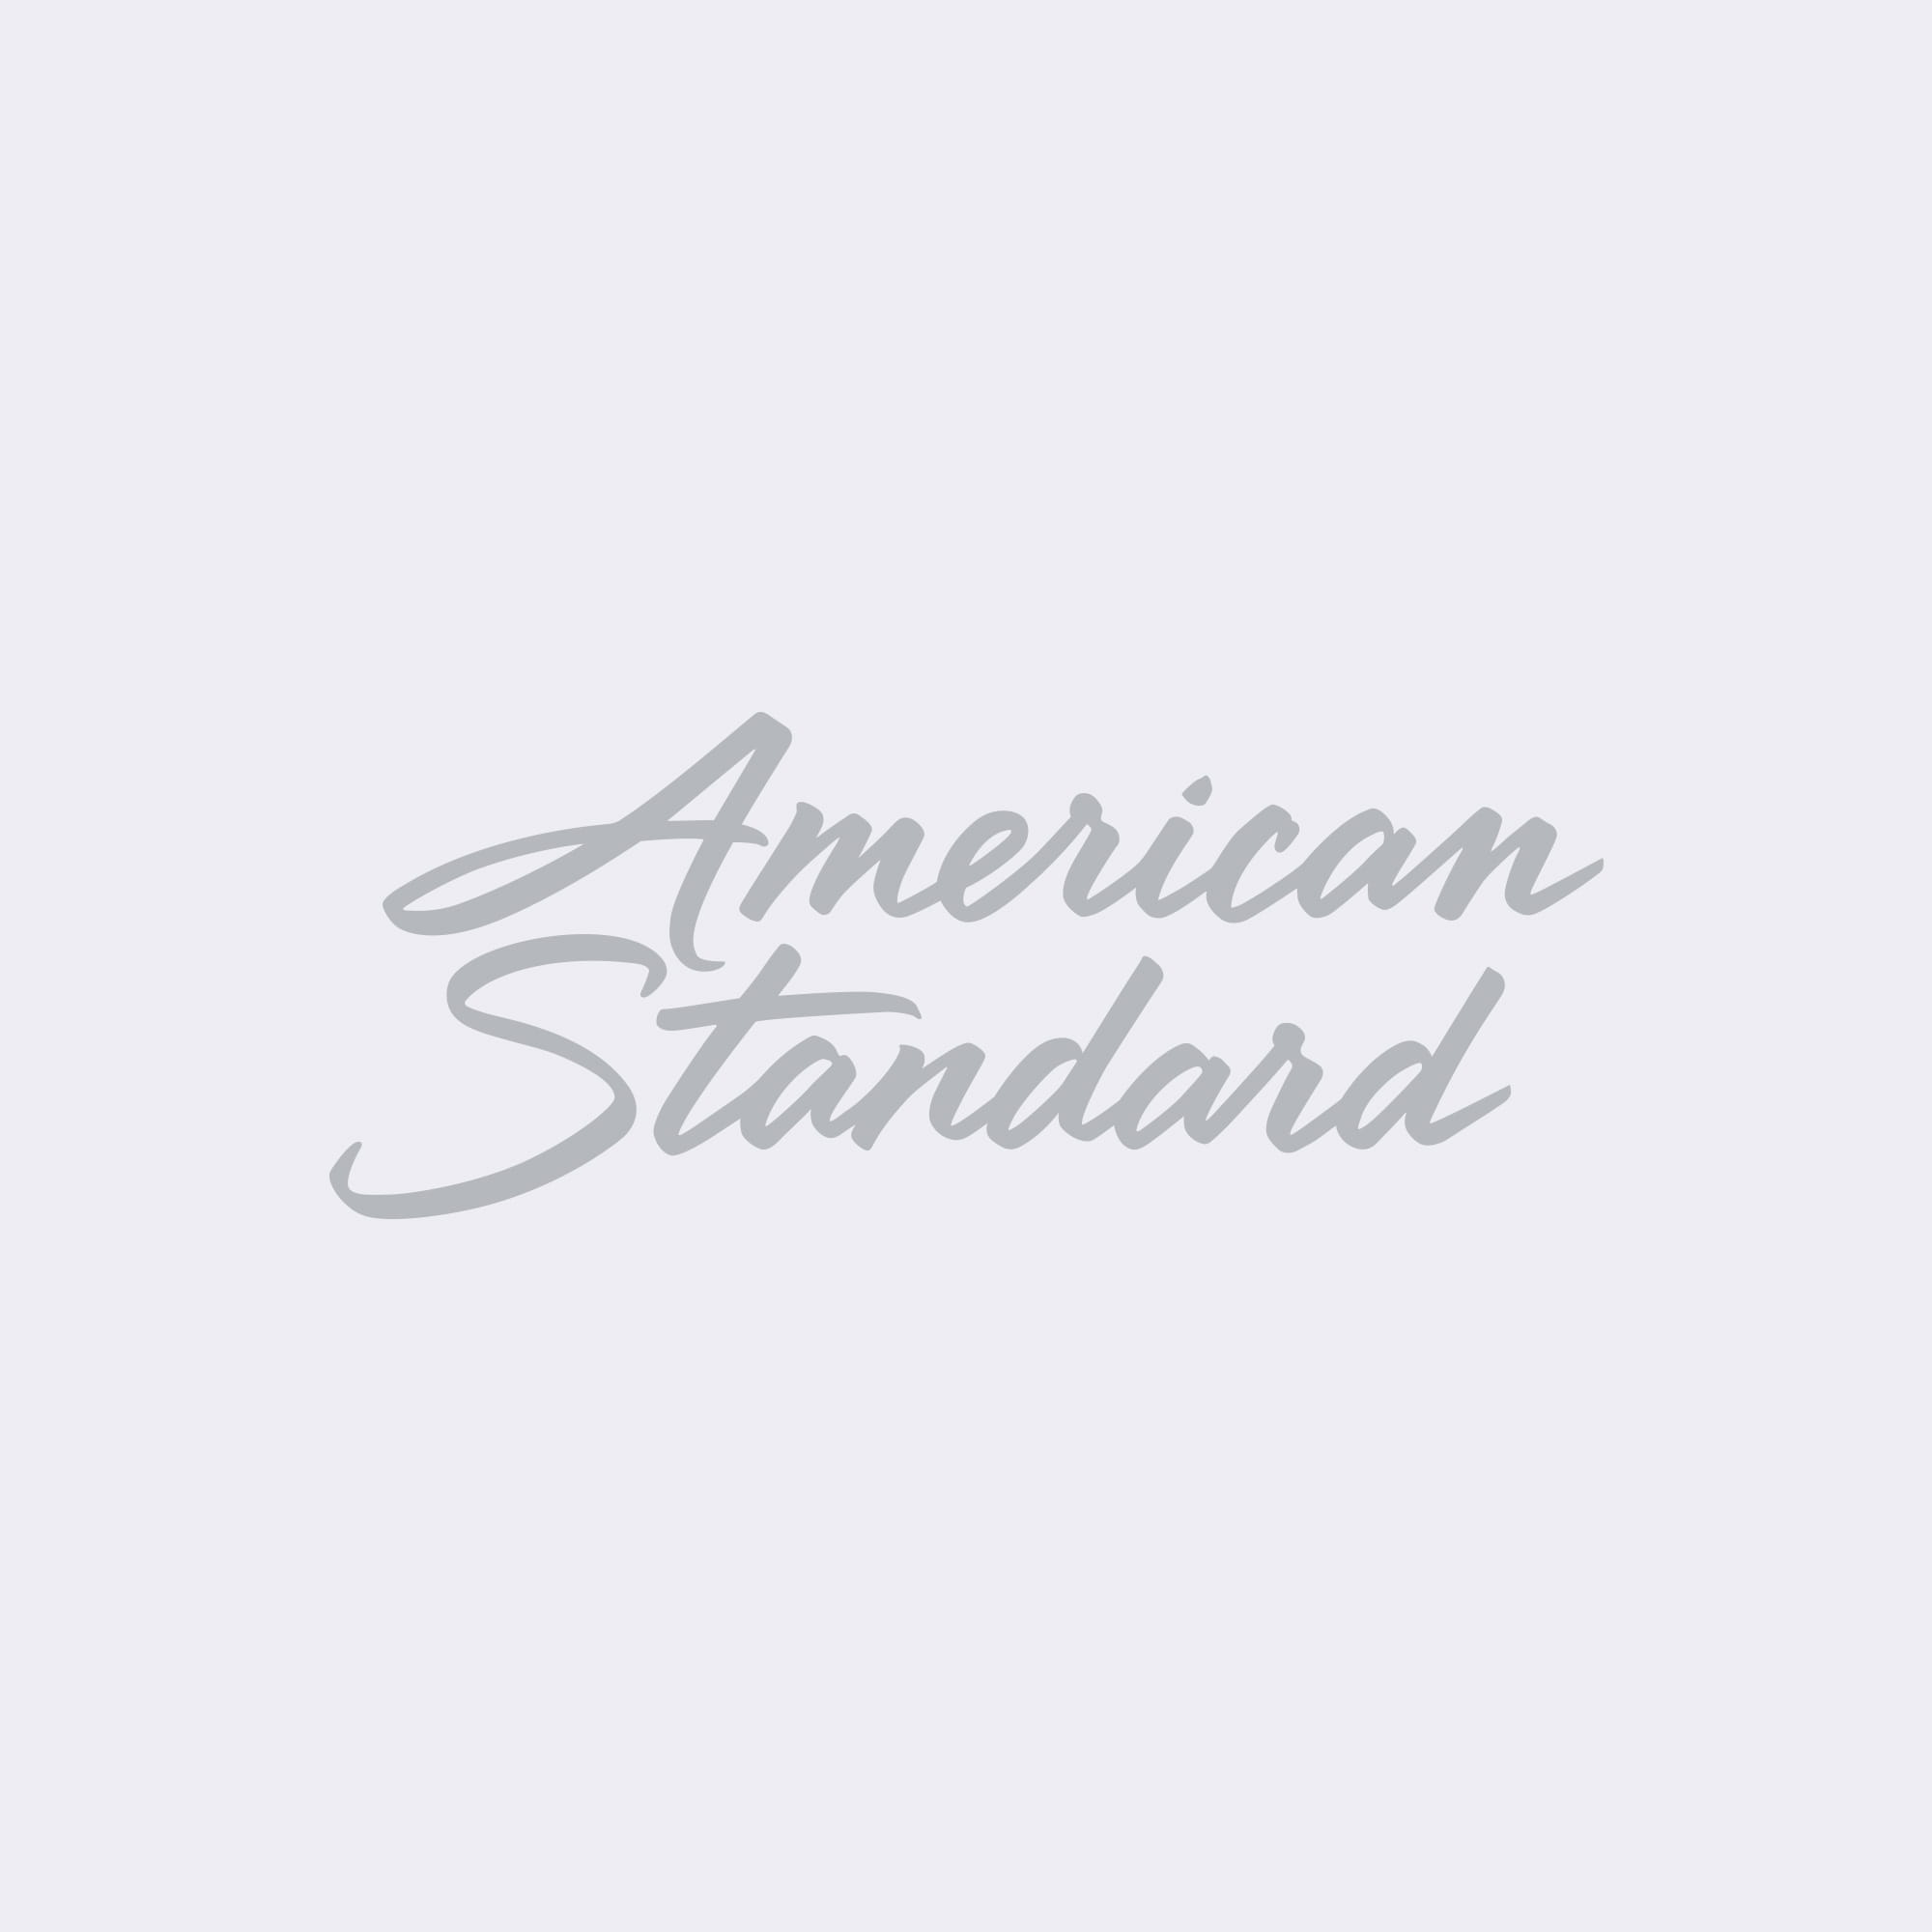 American Standard Bubble Logo